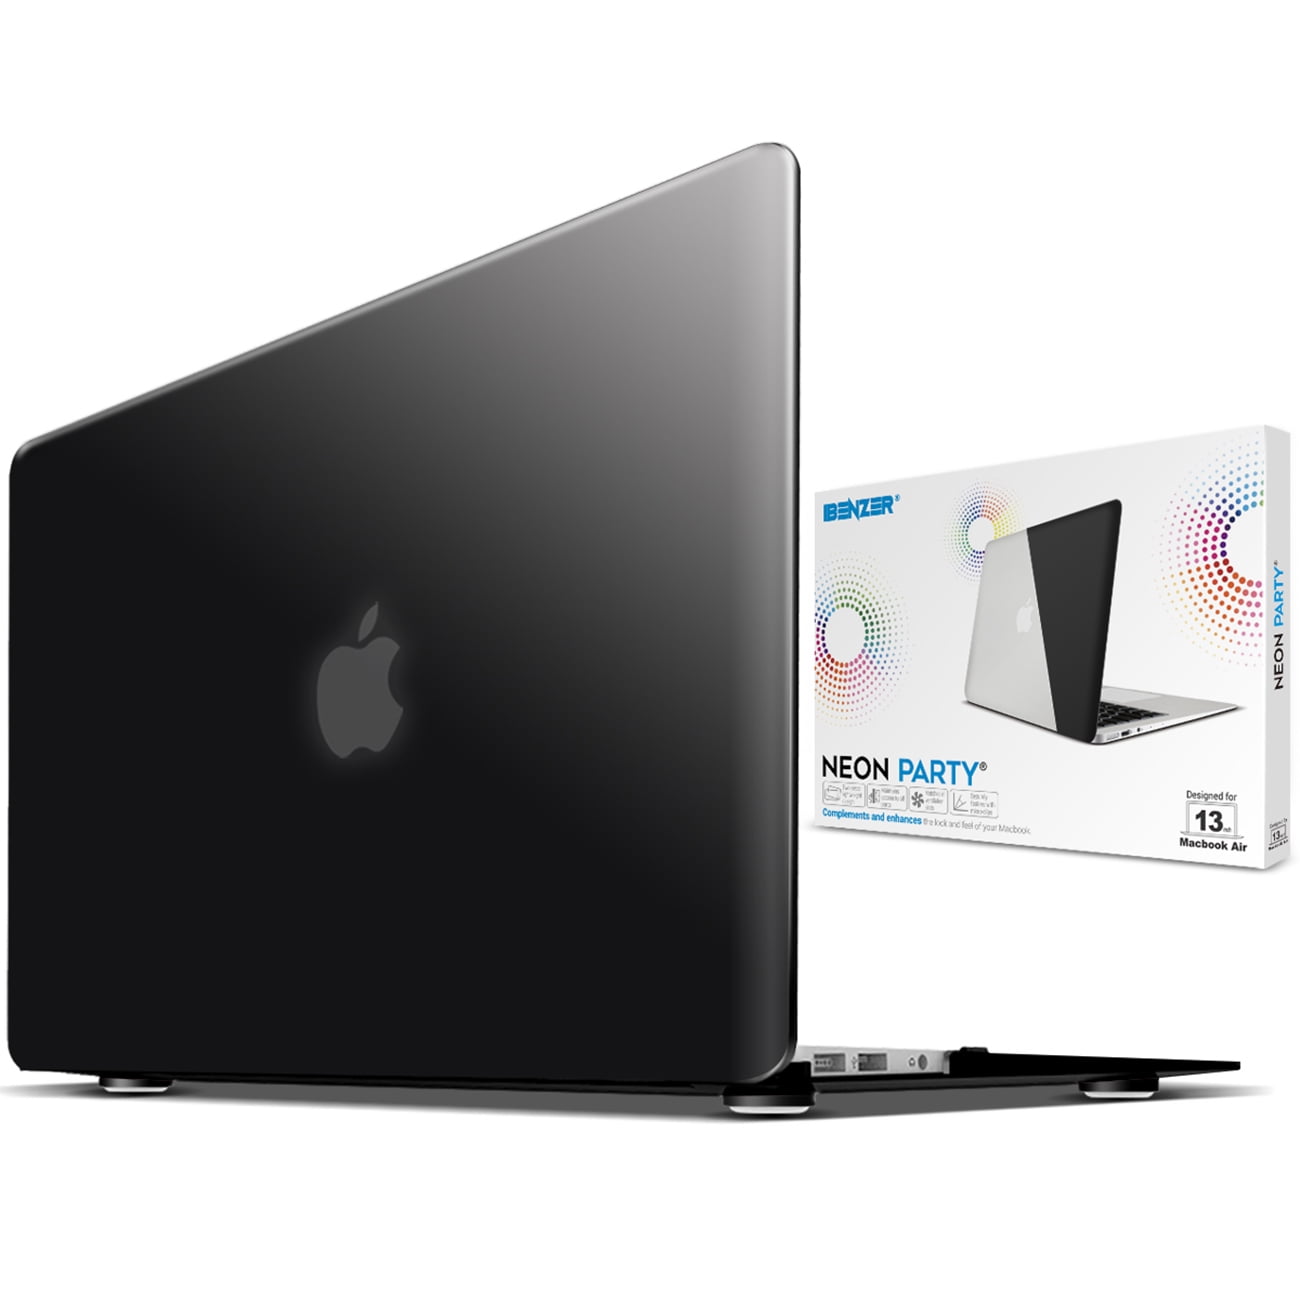 Superior Ibenzer Neon Party Macbook Pro 13 A1706& A1708 Black Case ...